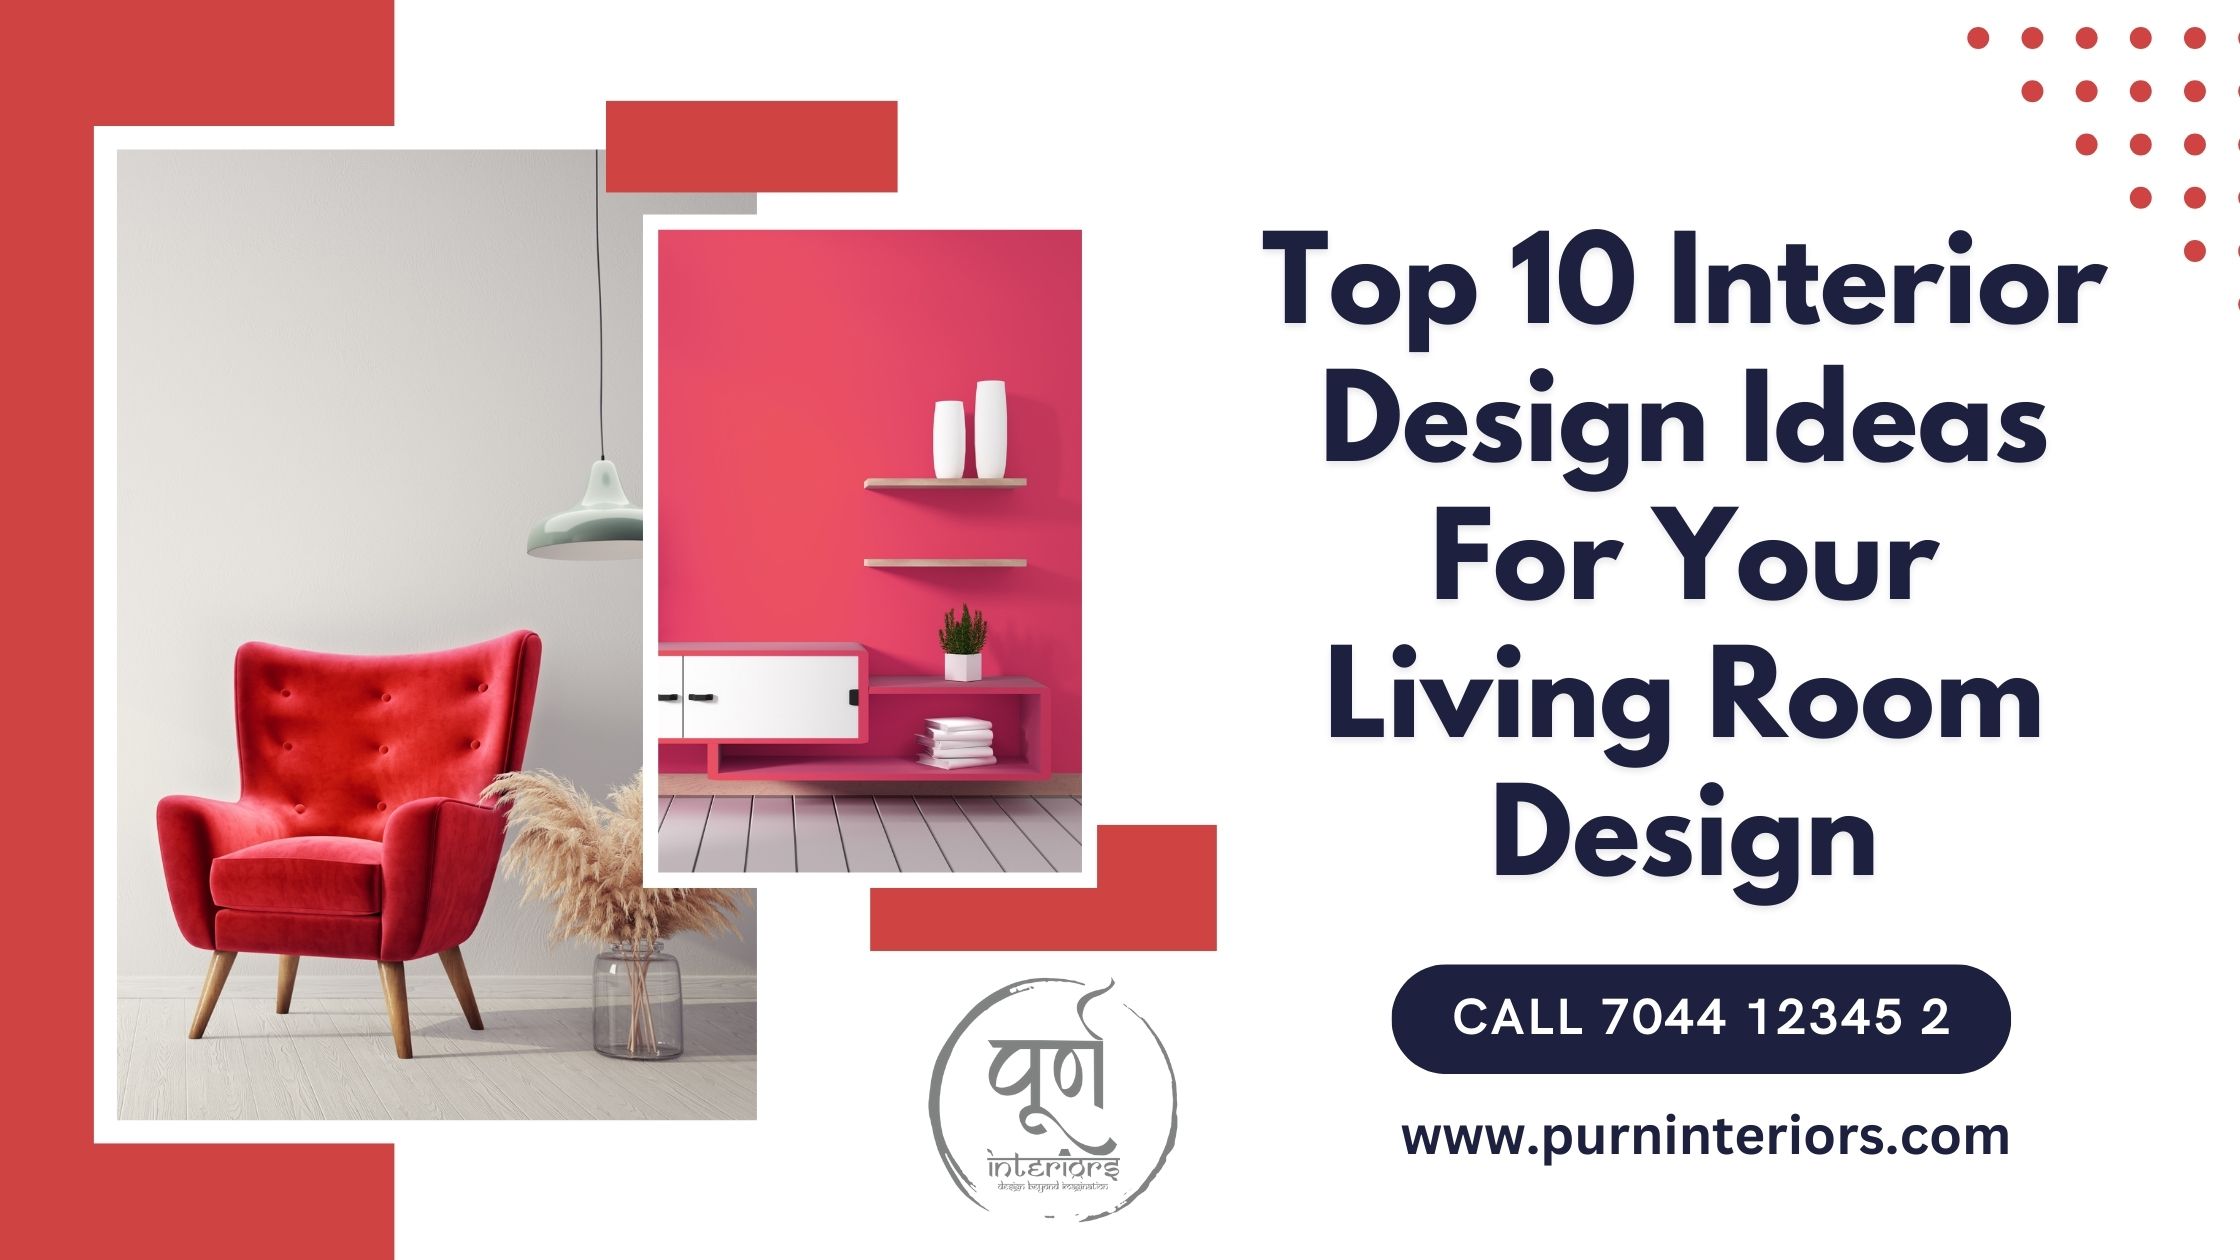 Top 10 Interior Design Ideas For Your Living Room Design